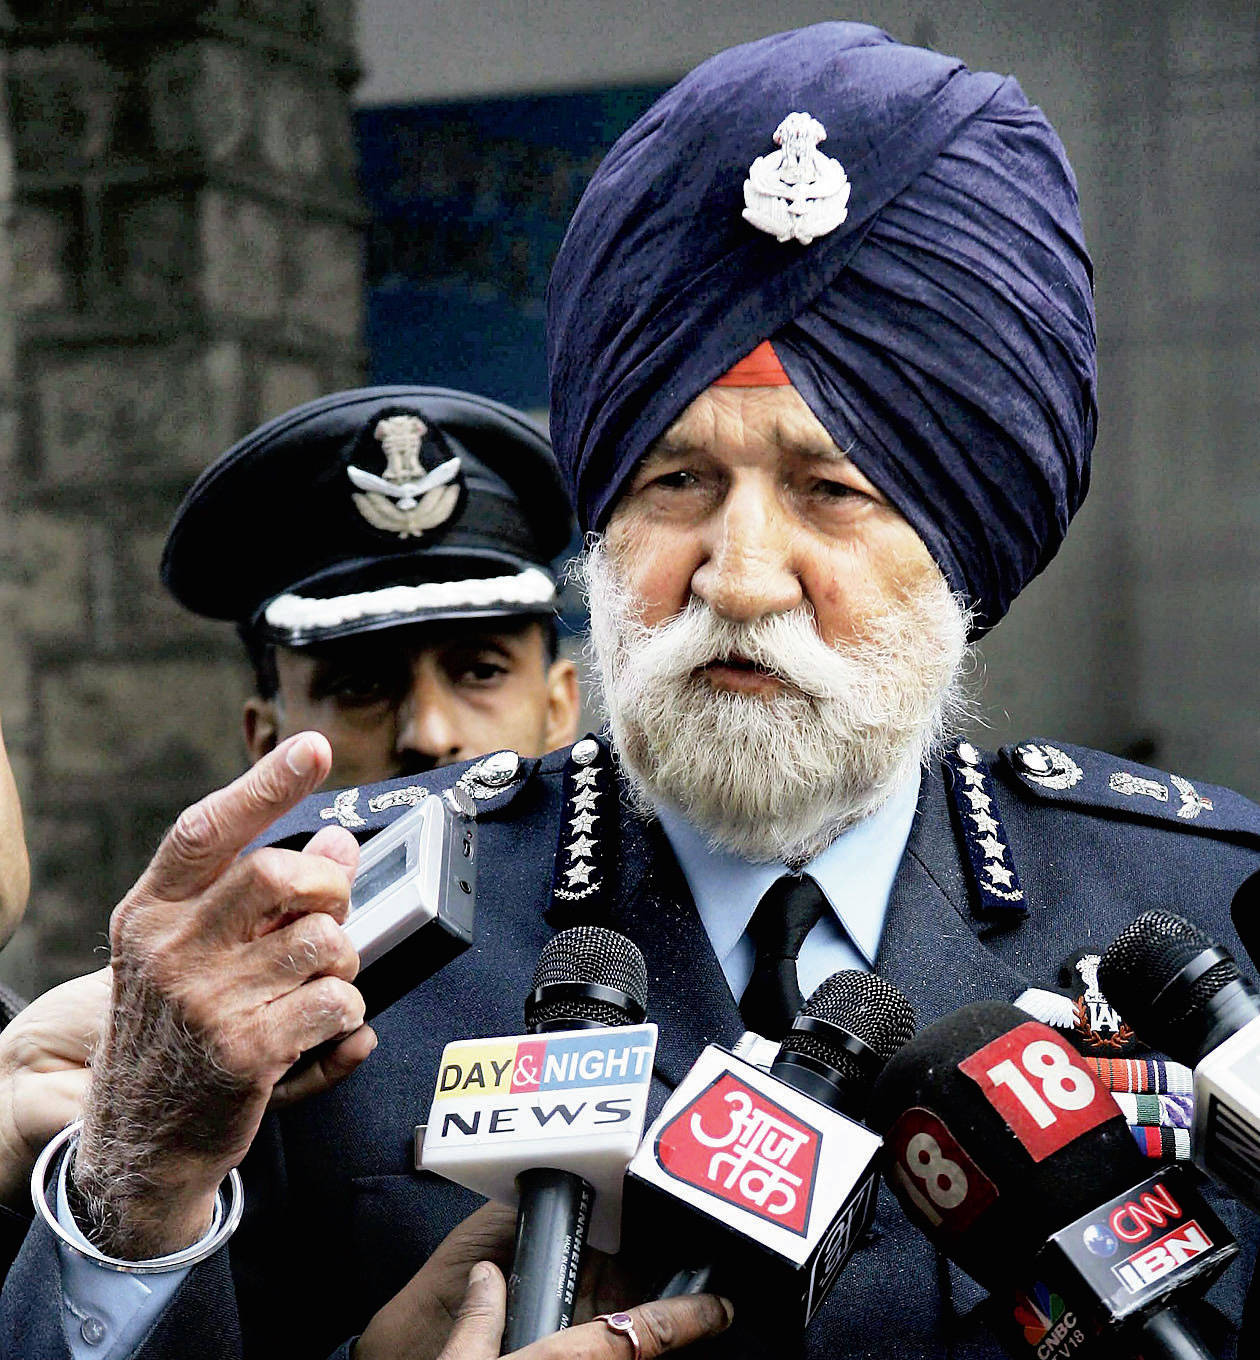 iaf: IAF Marshal Arjan Singh passes away